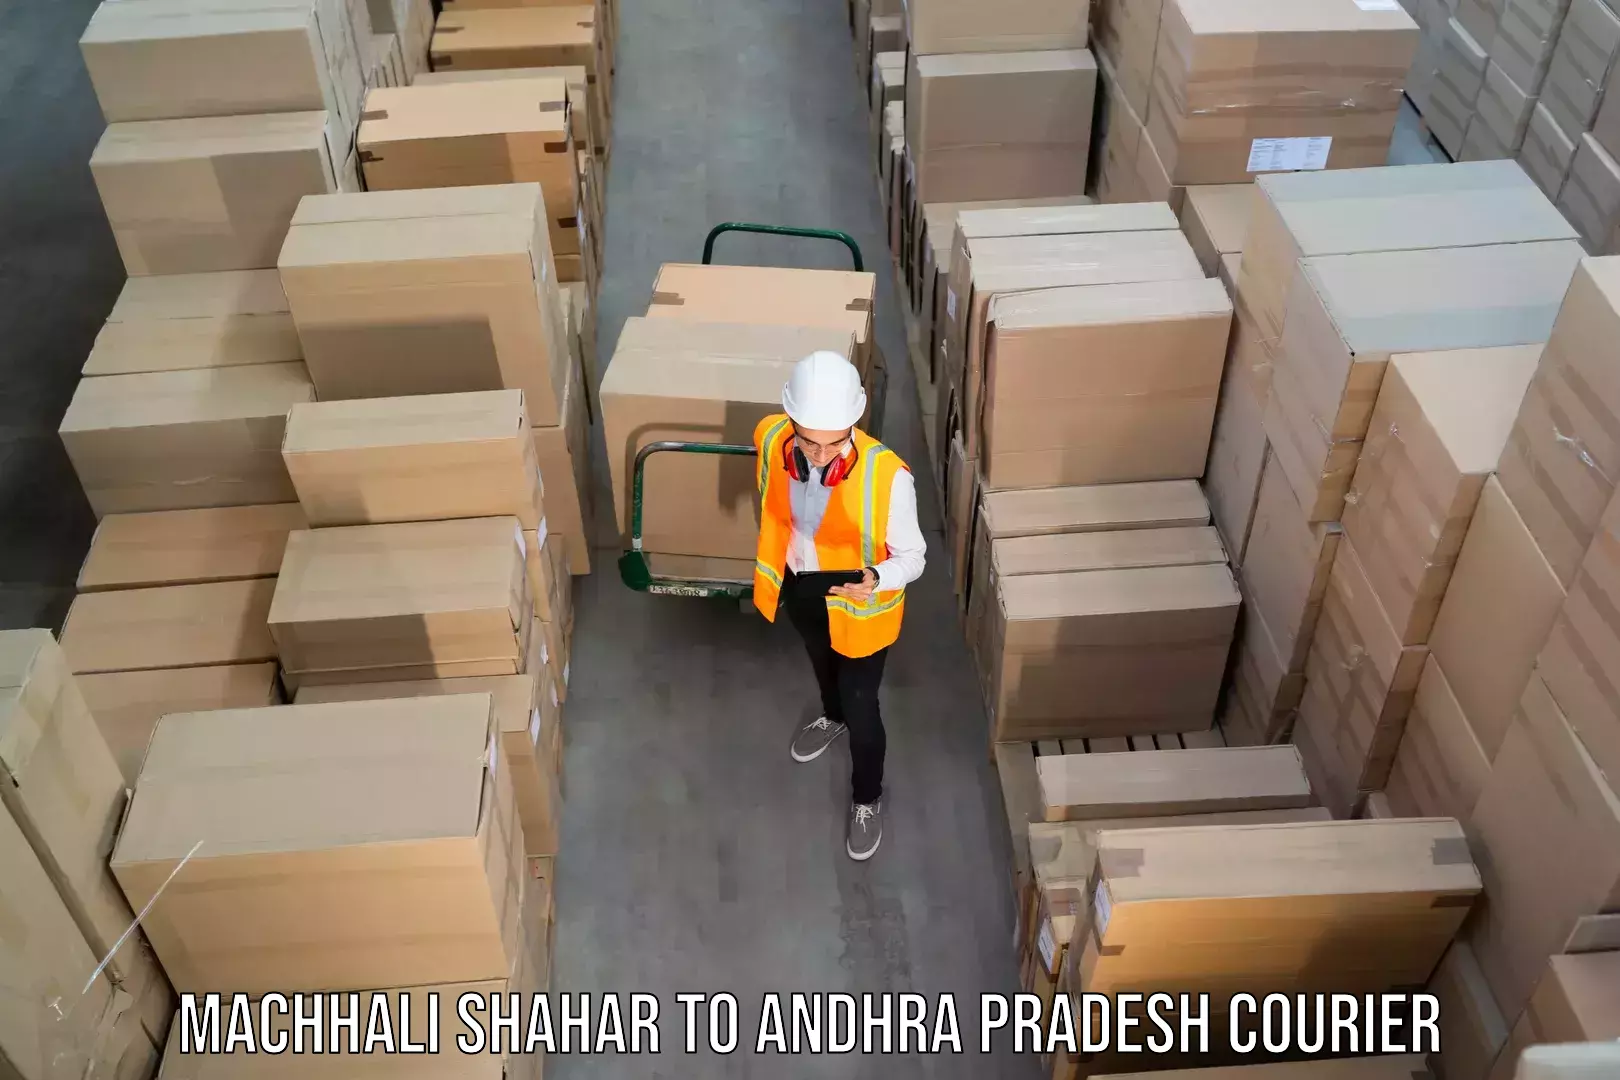 Customizable delivery plans Machhali Shahar to Kurnool